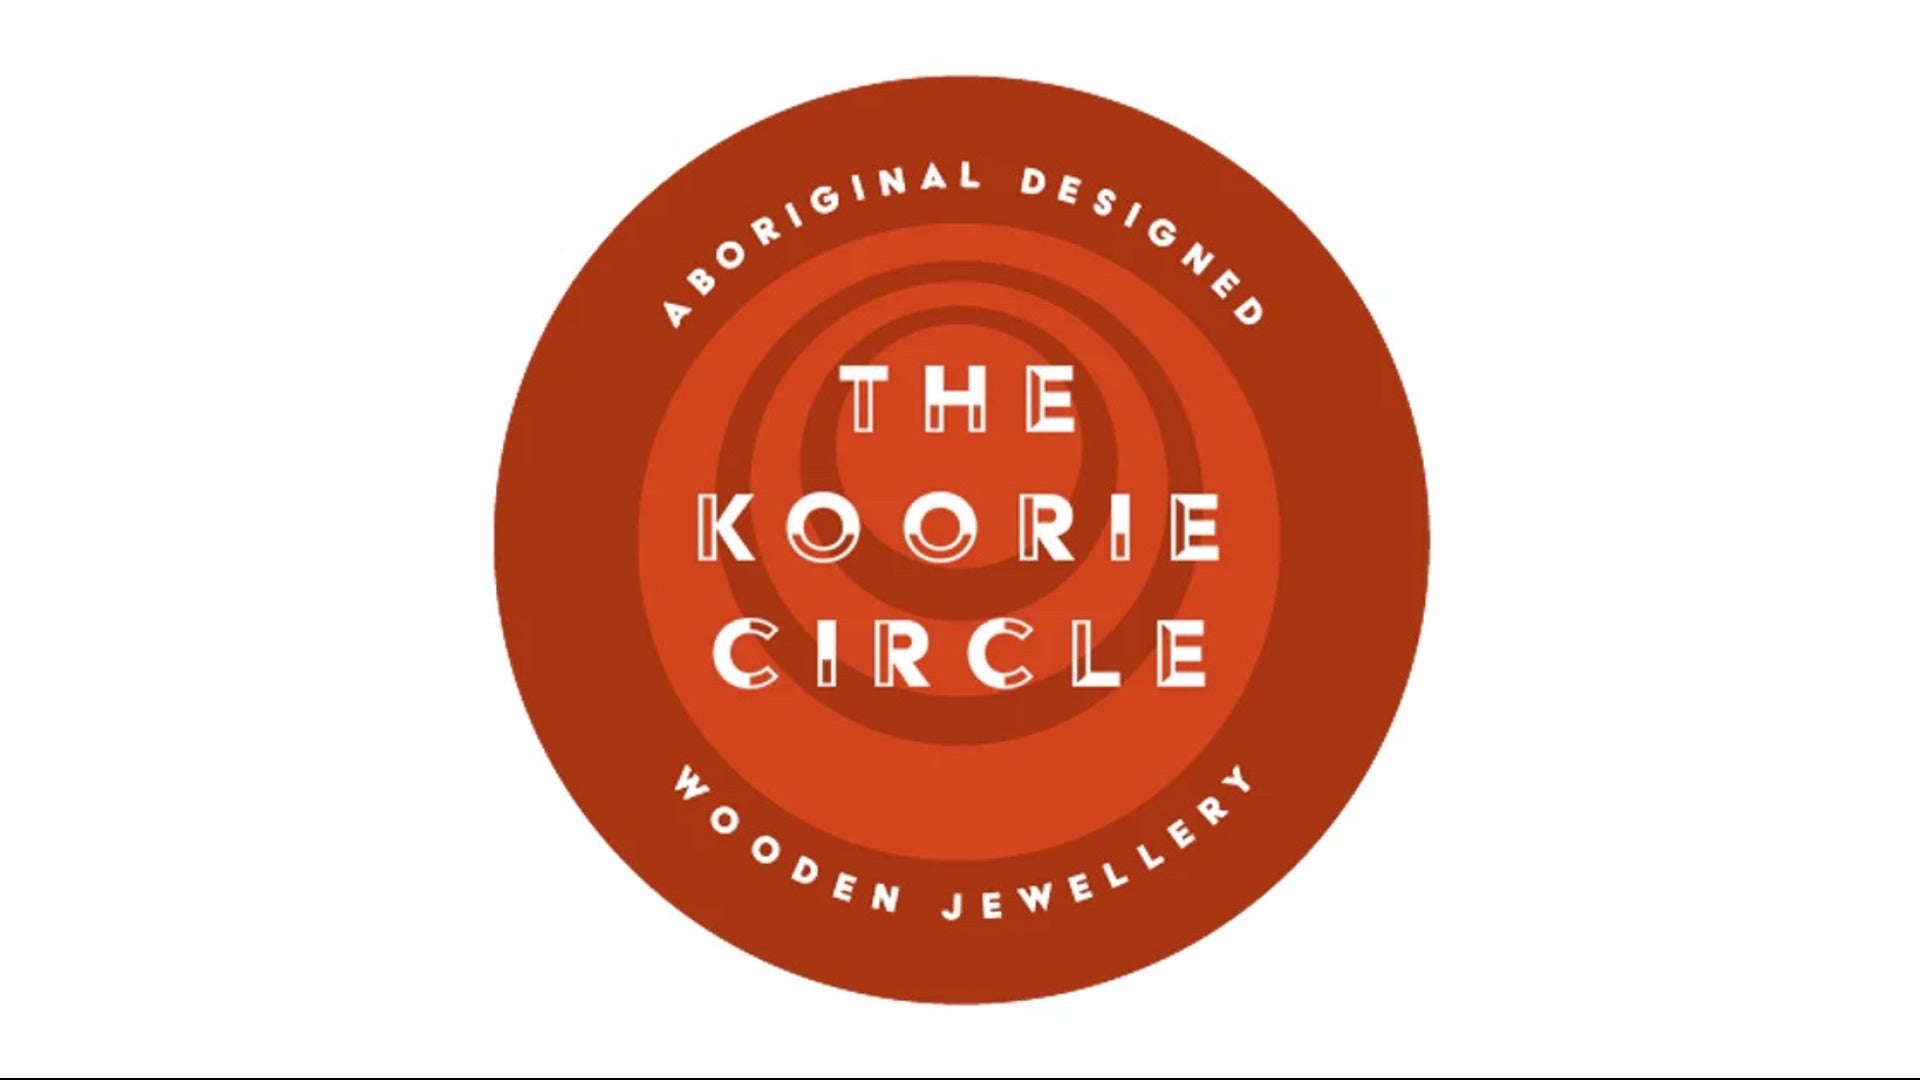 The Koorie Circle